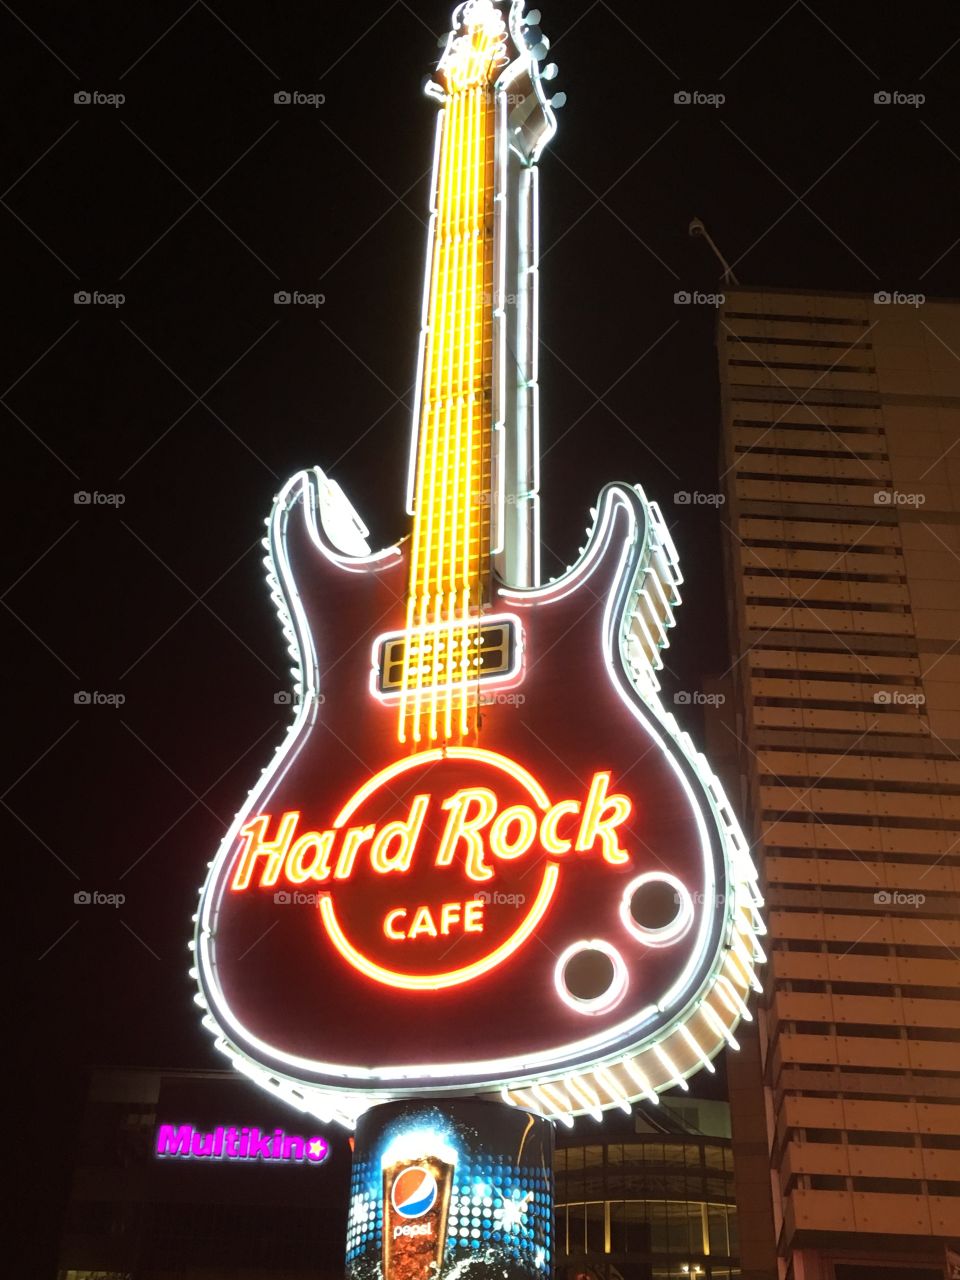 #hardrock #sign #restaurant #warsaw #music